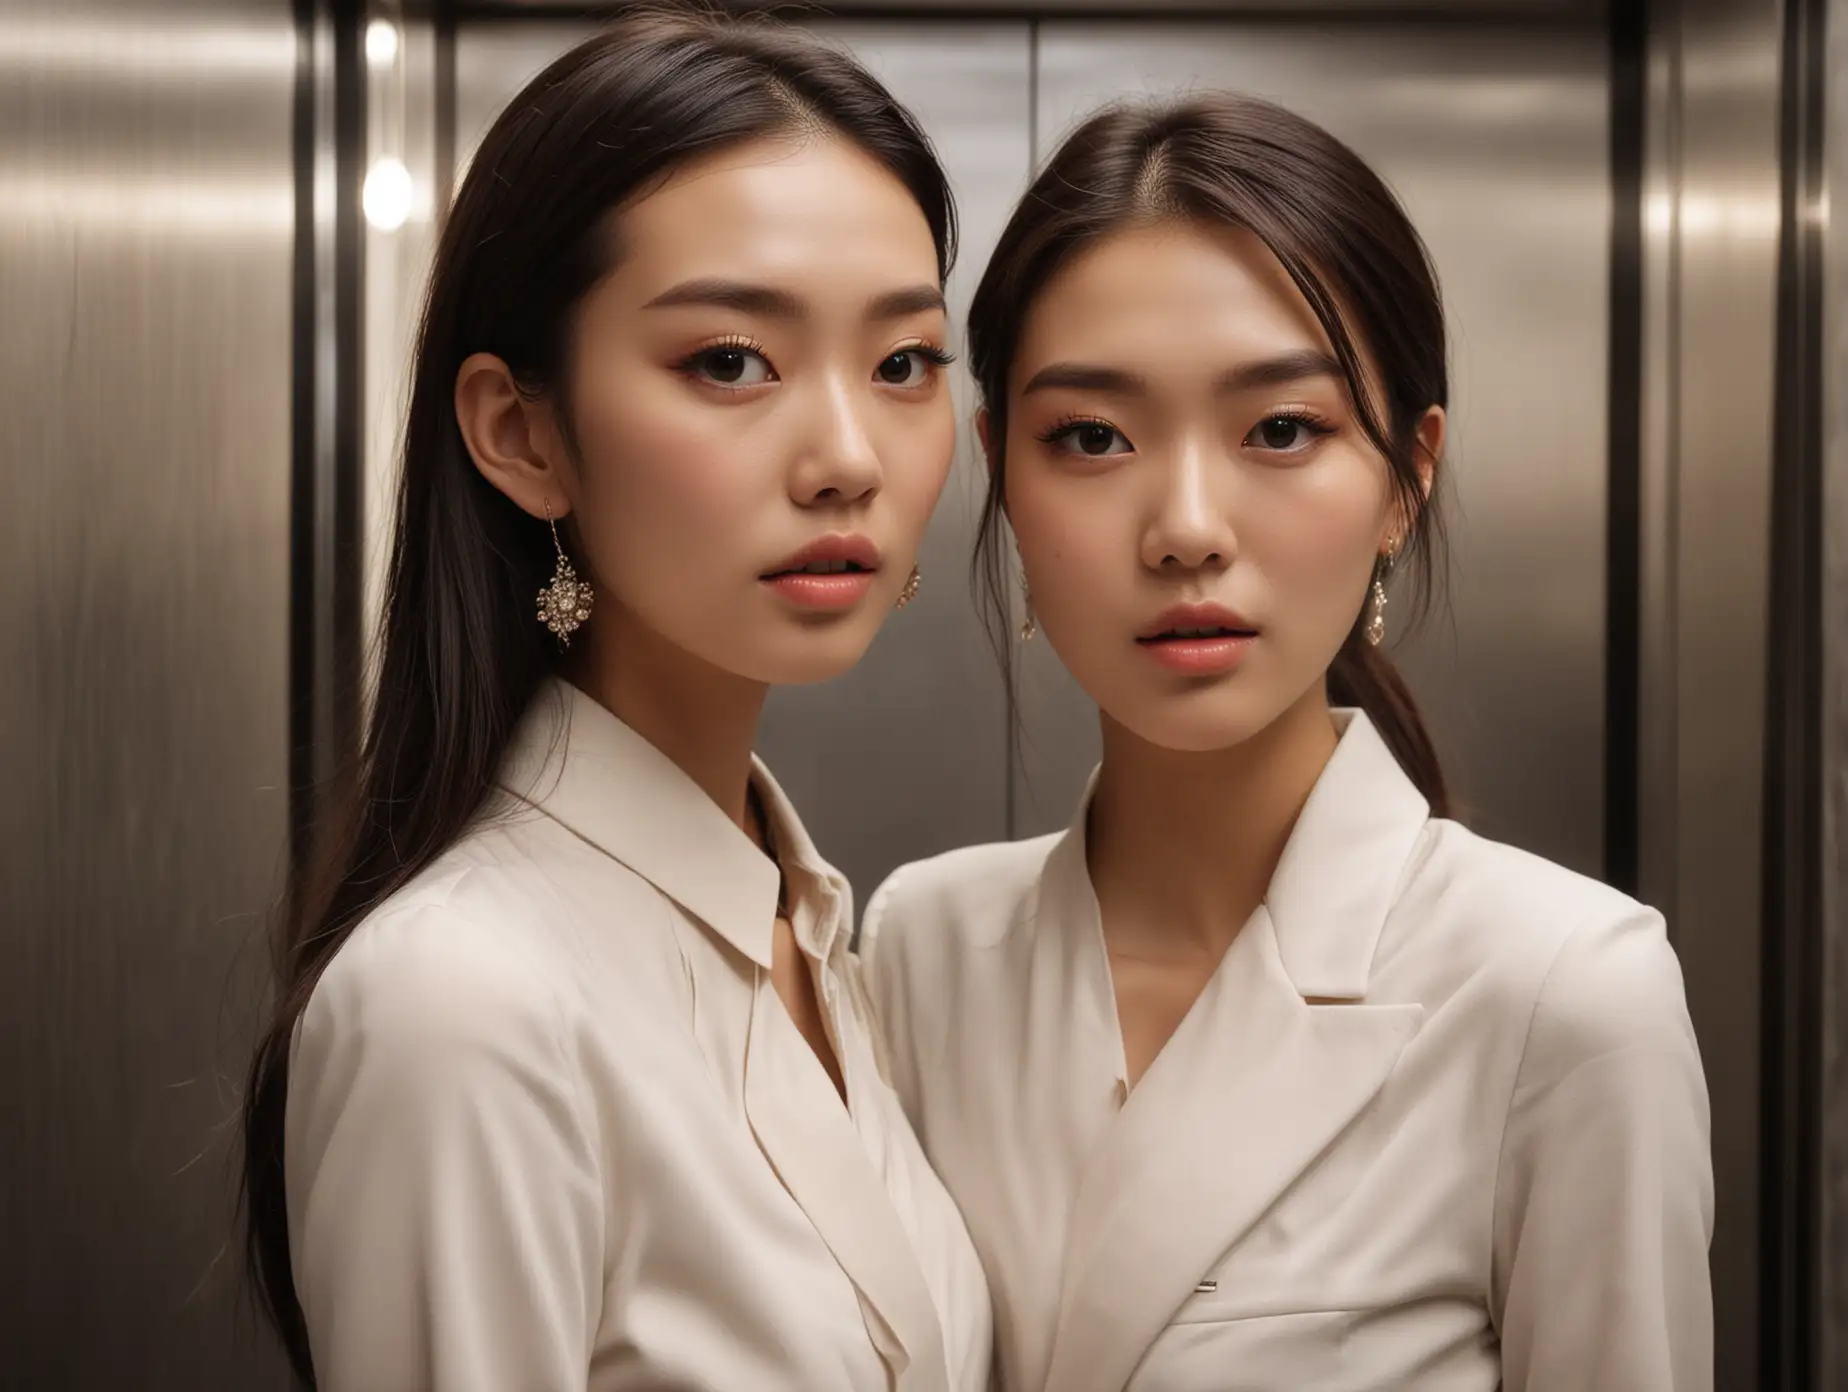 Shanghai-Fashion-Models-Blushing-in-Elevator-Glamour-Shot